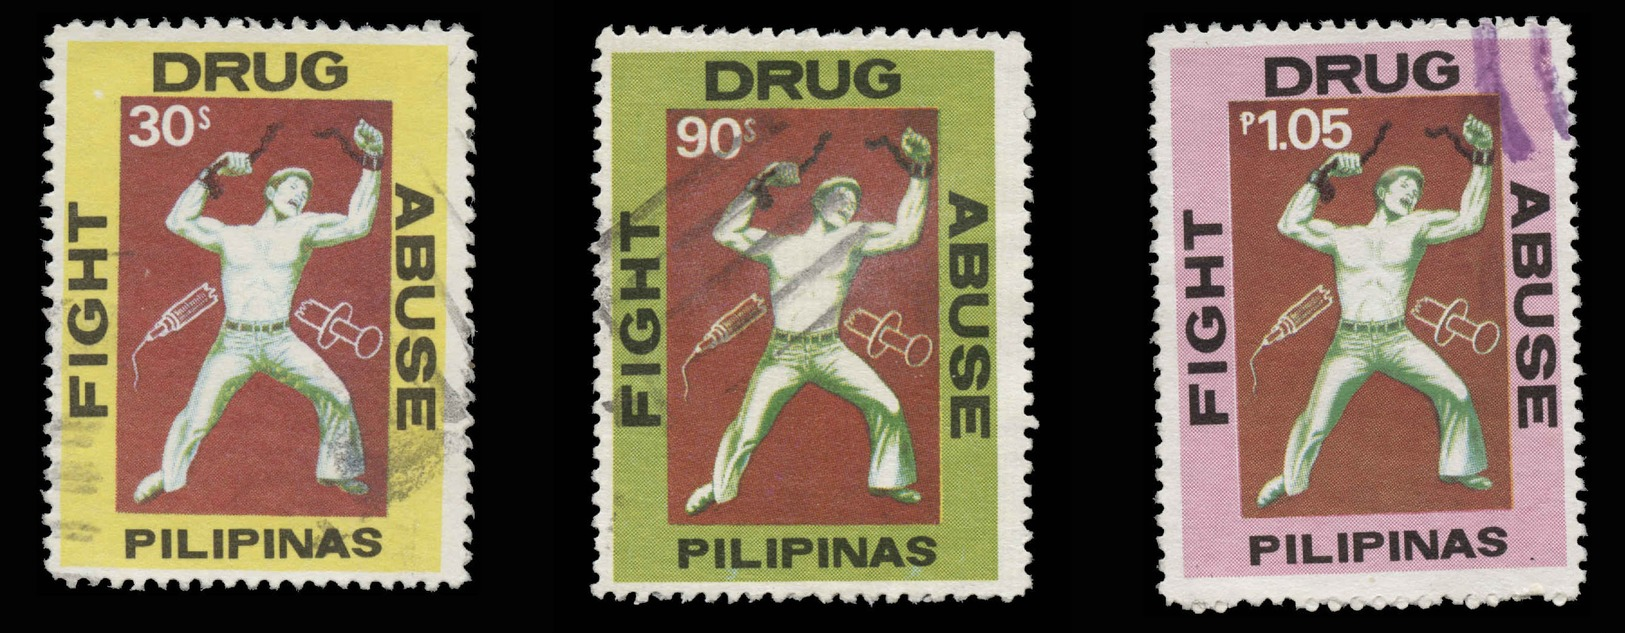 Philippines Scott #1422-1424, Set Of 3 (1979) Fight Drug Abuse, Used - Philippines